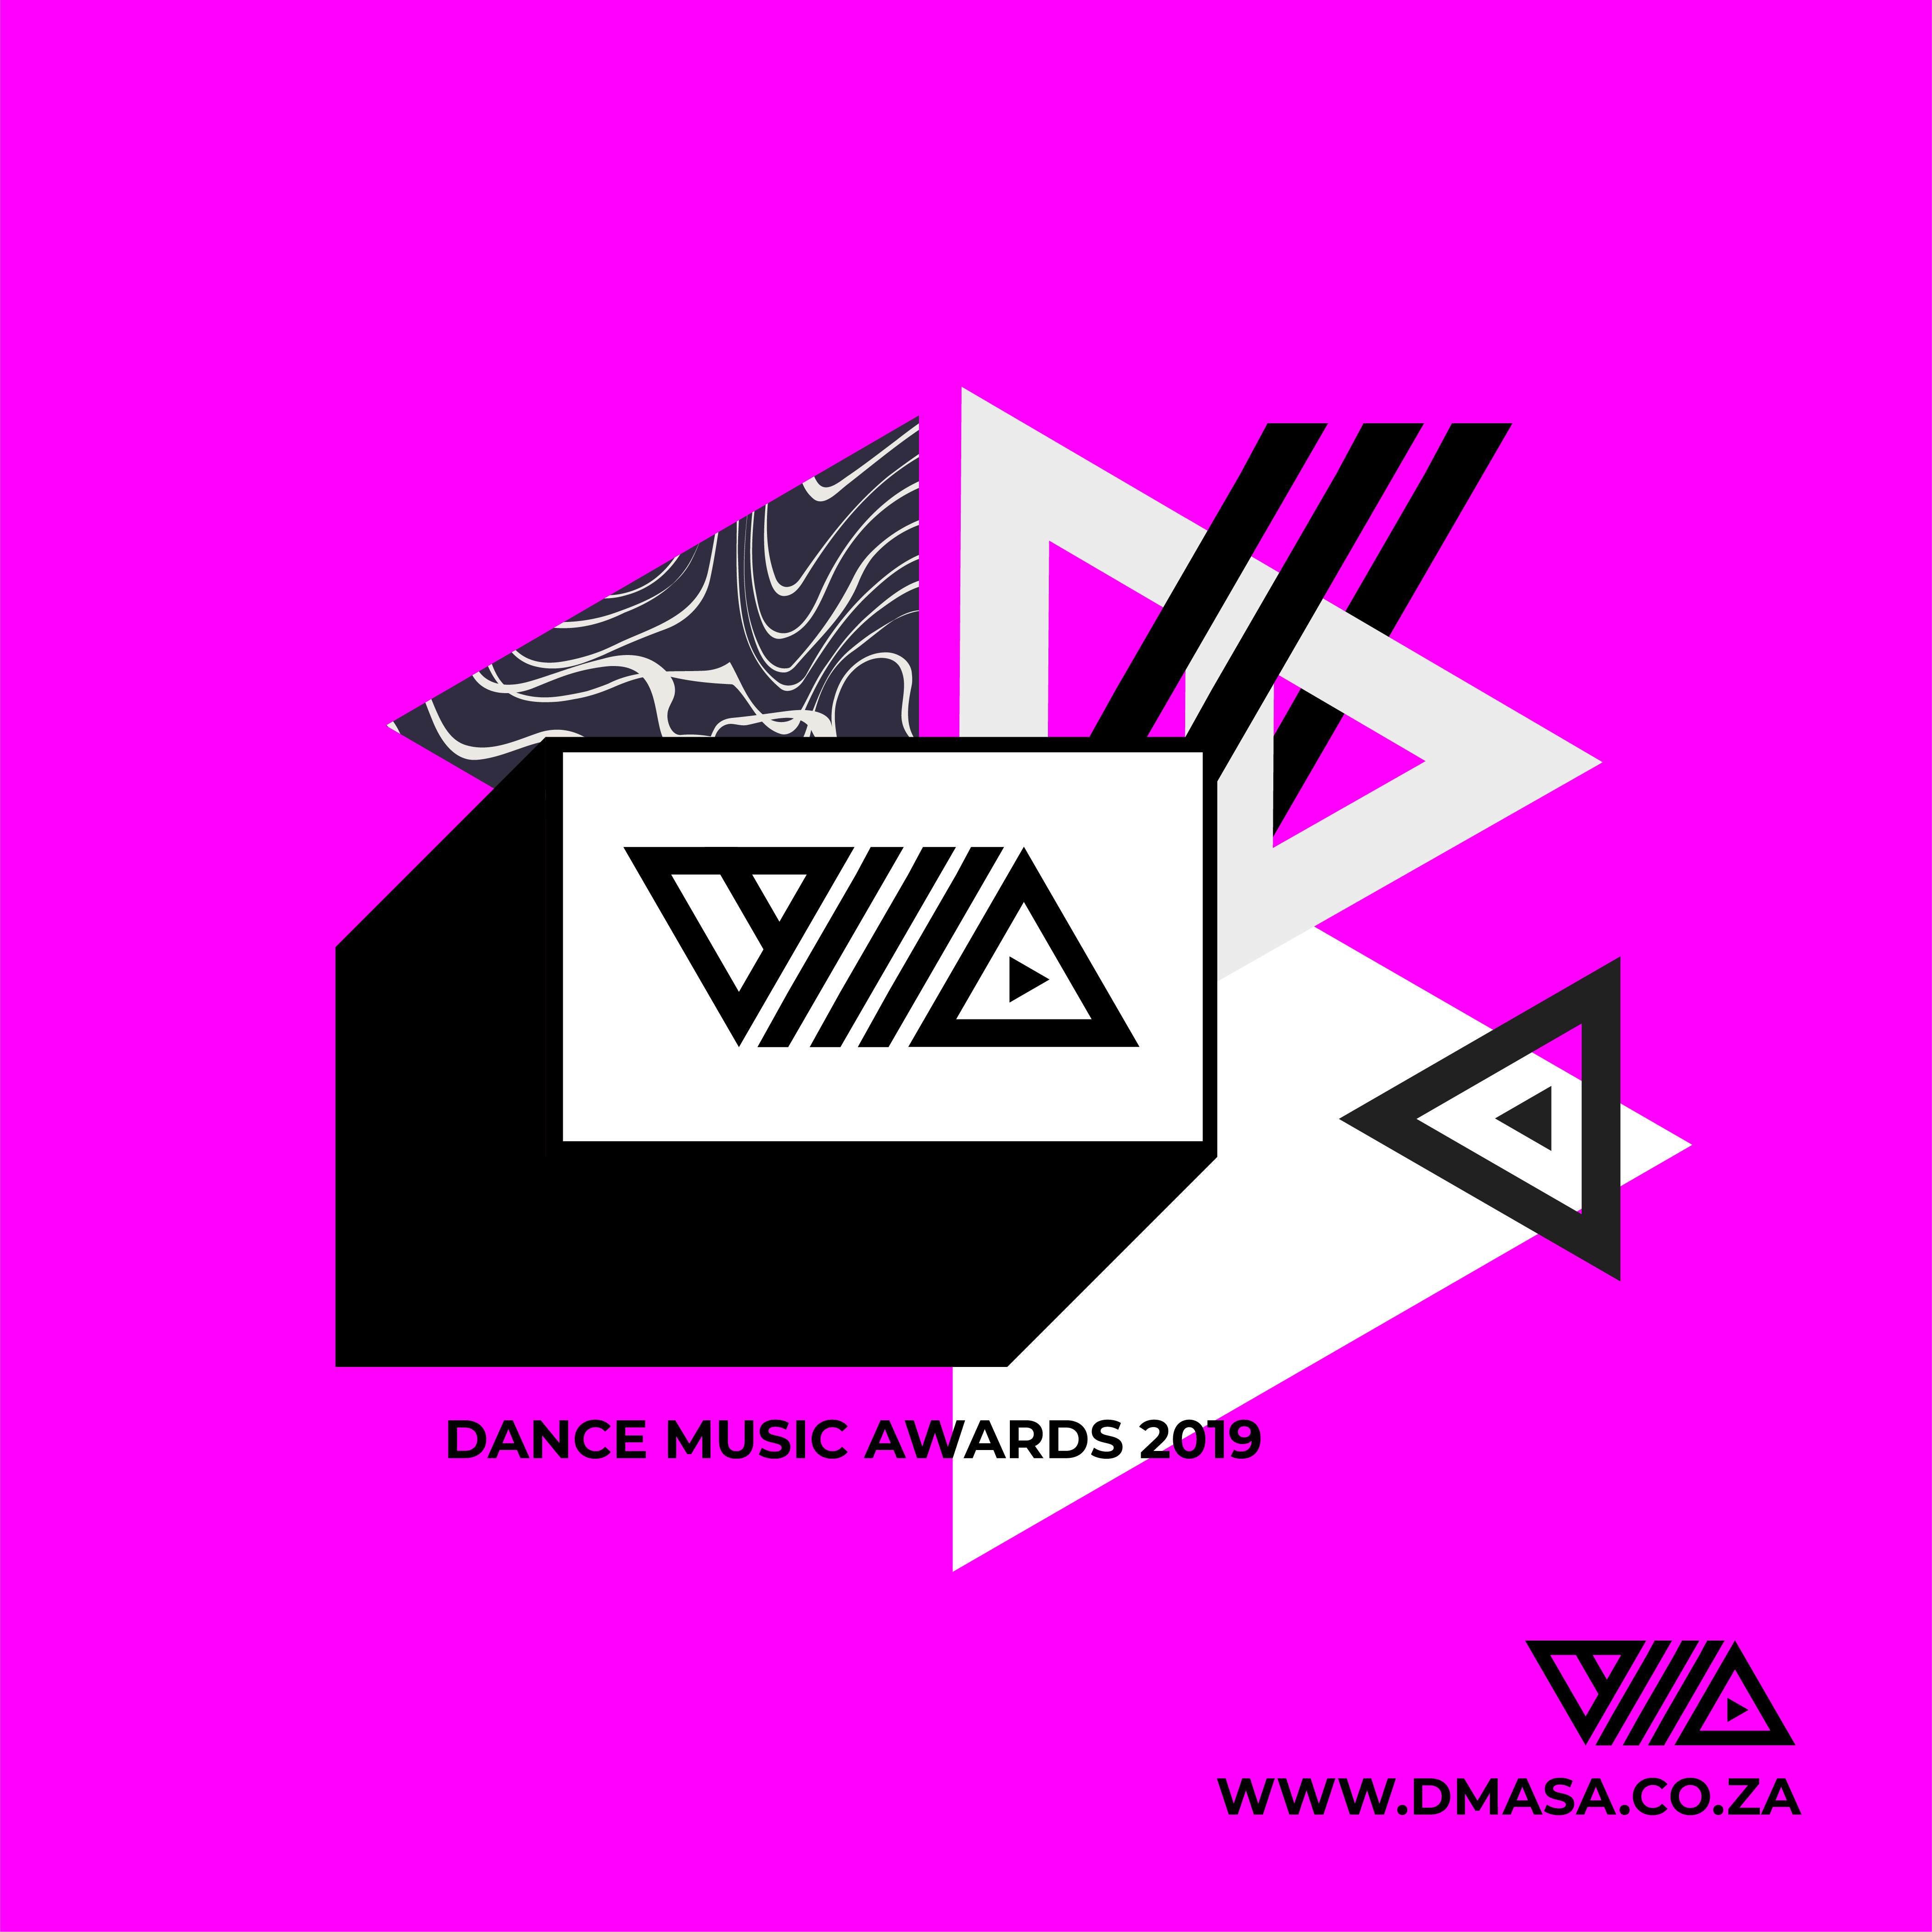 annual Dance Music Awards South Africa (DMASA) 2019 logo